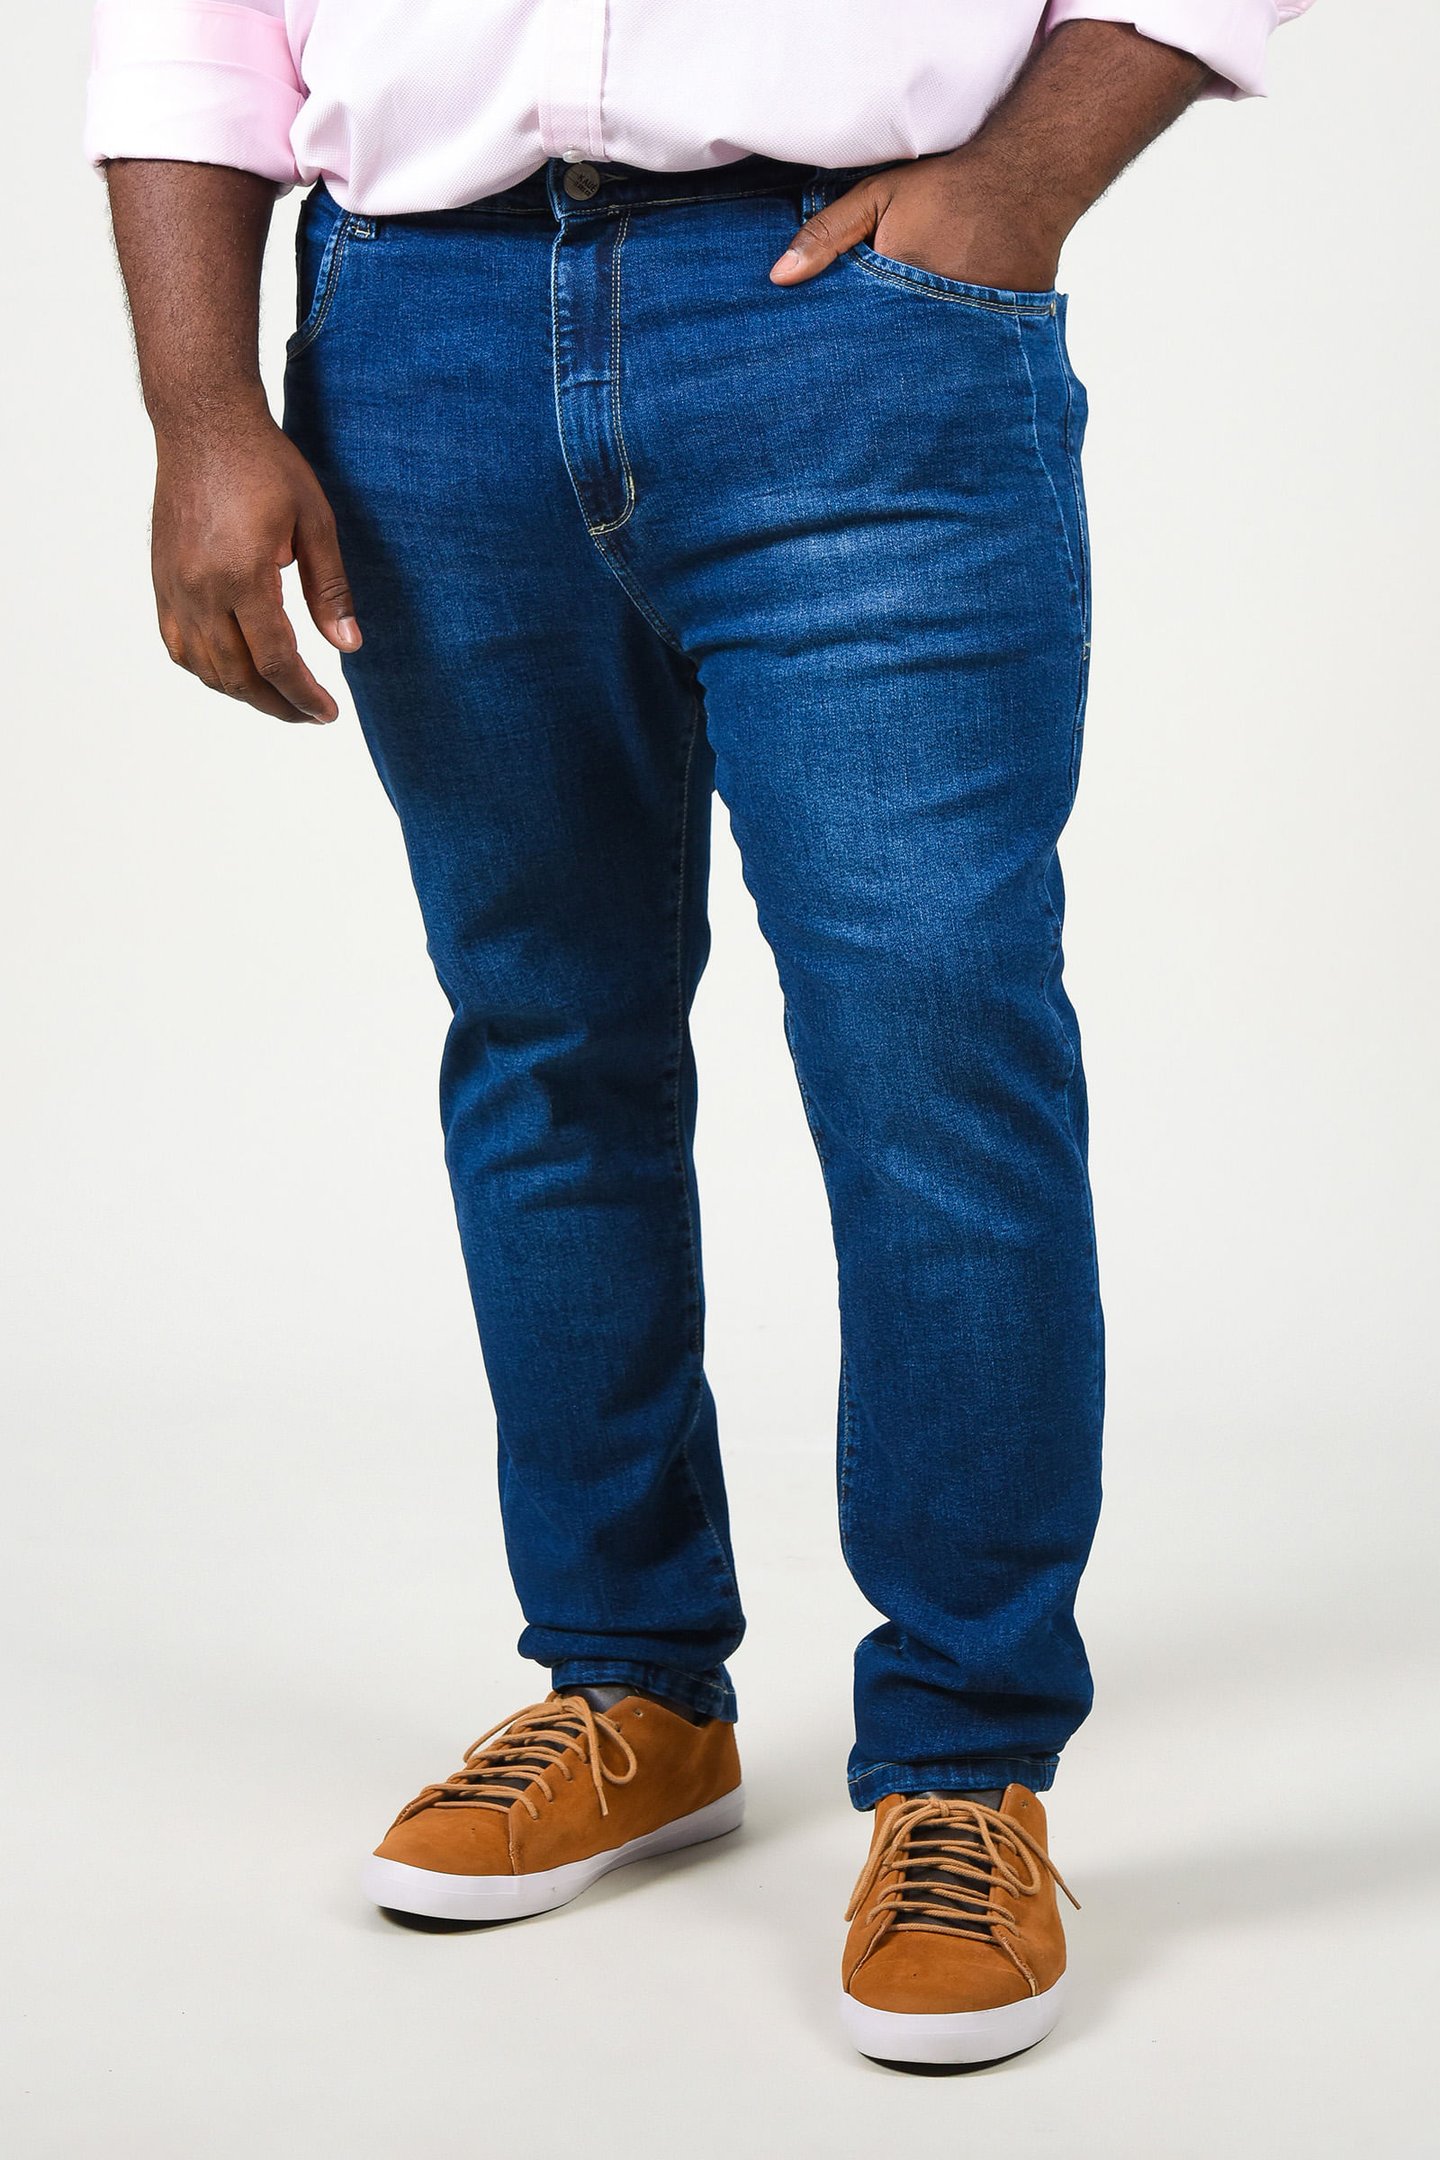 Calça skinny jeans com elastano plus size jeans blue